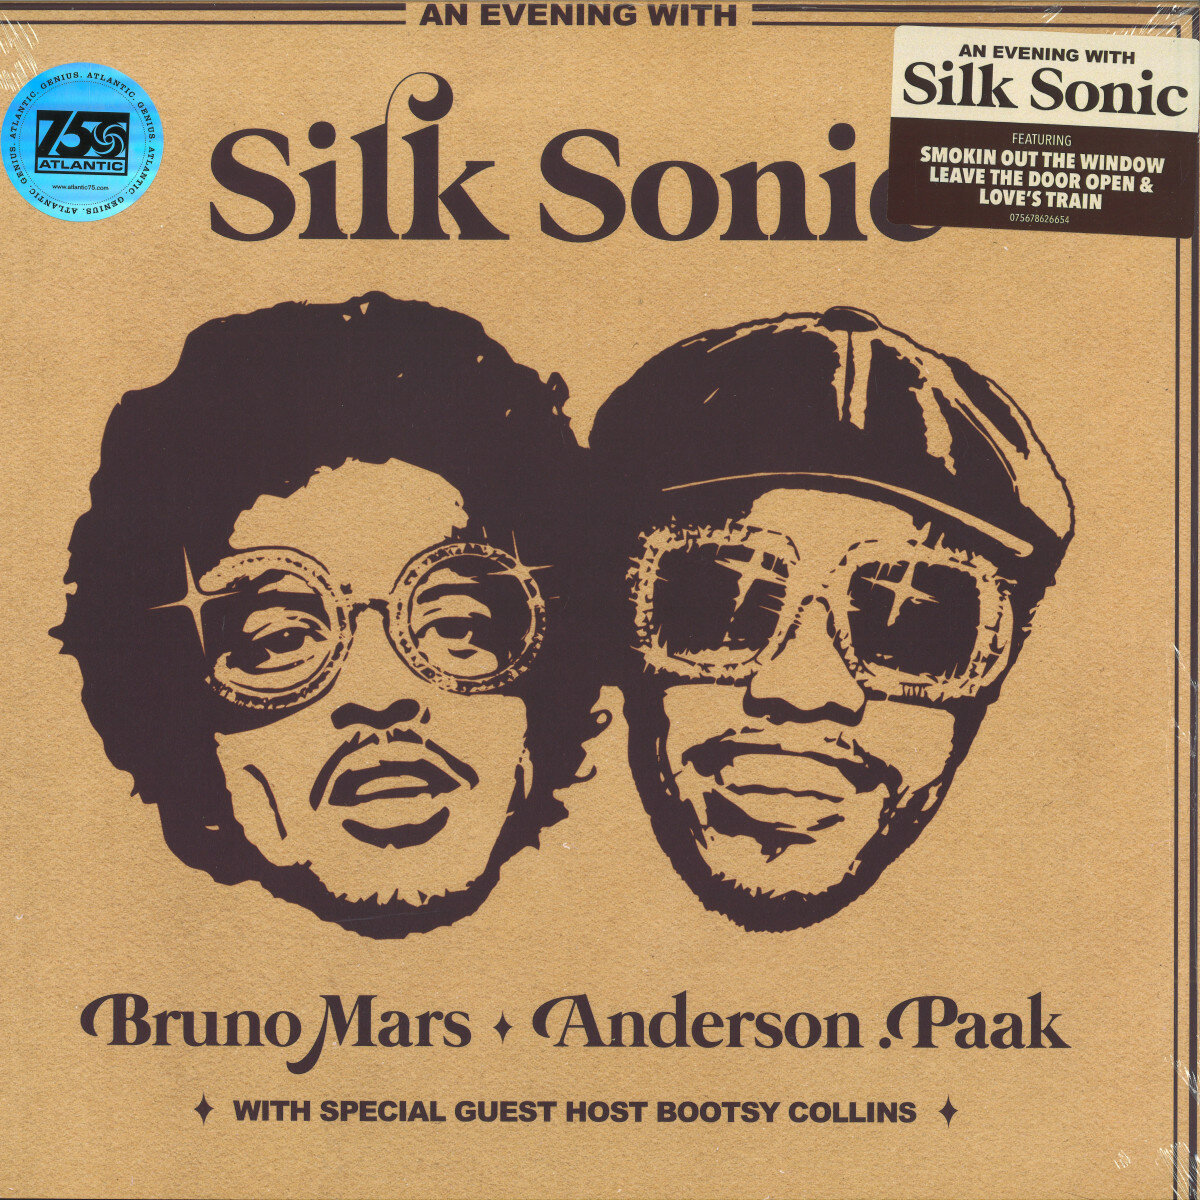 Виниловая пластинка BRUNO MARS - ANDERSON PAAK - SILK SONIC / EVENING WITH SILK SONIC (1LP)